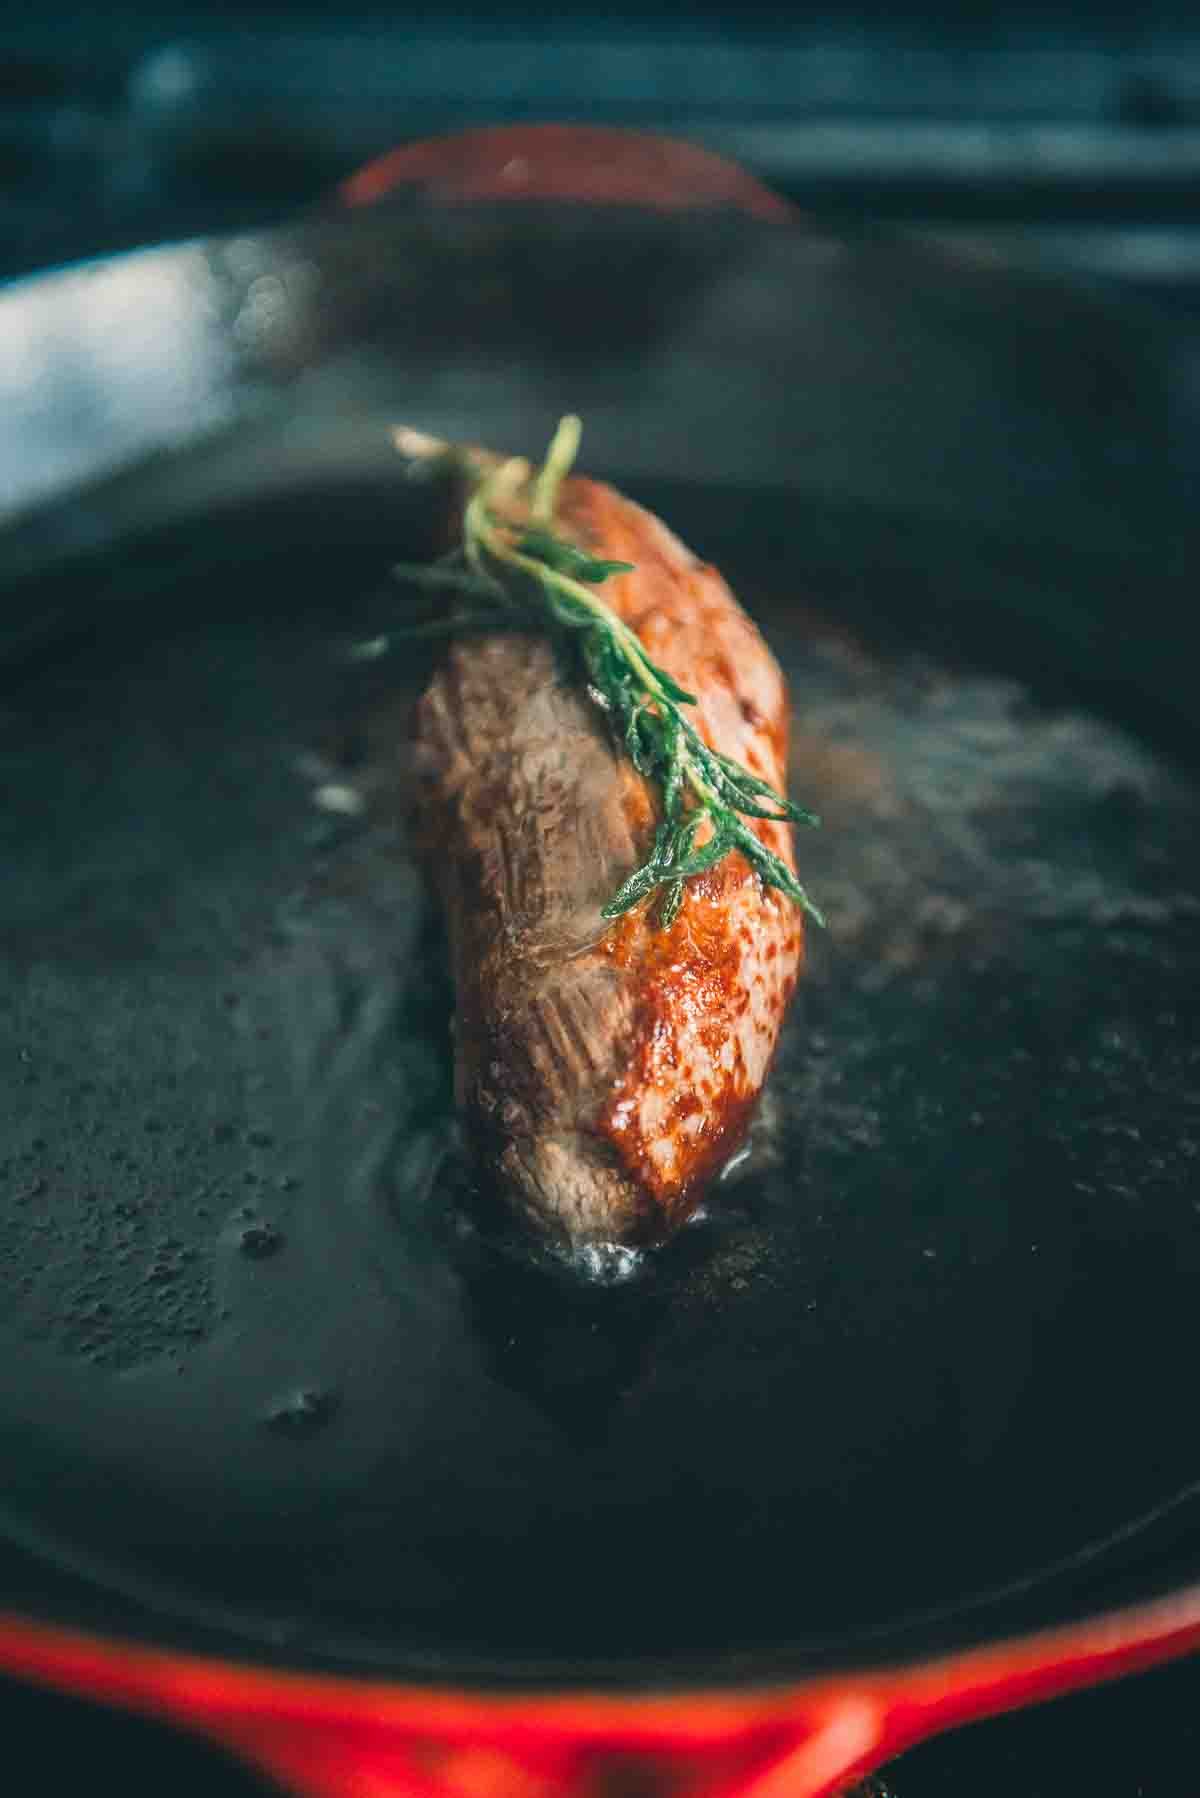 Petite tender steak searing in cast iron pan. 